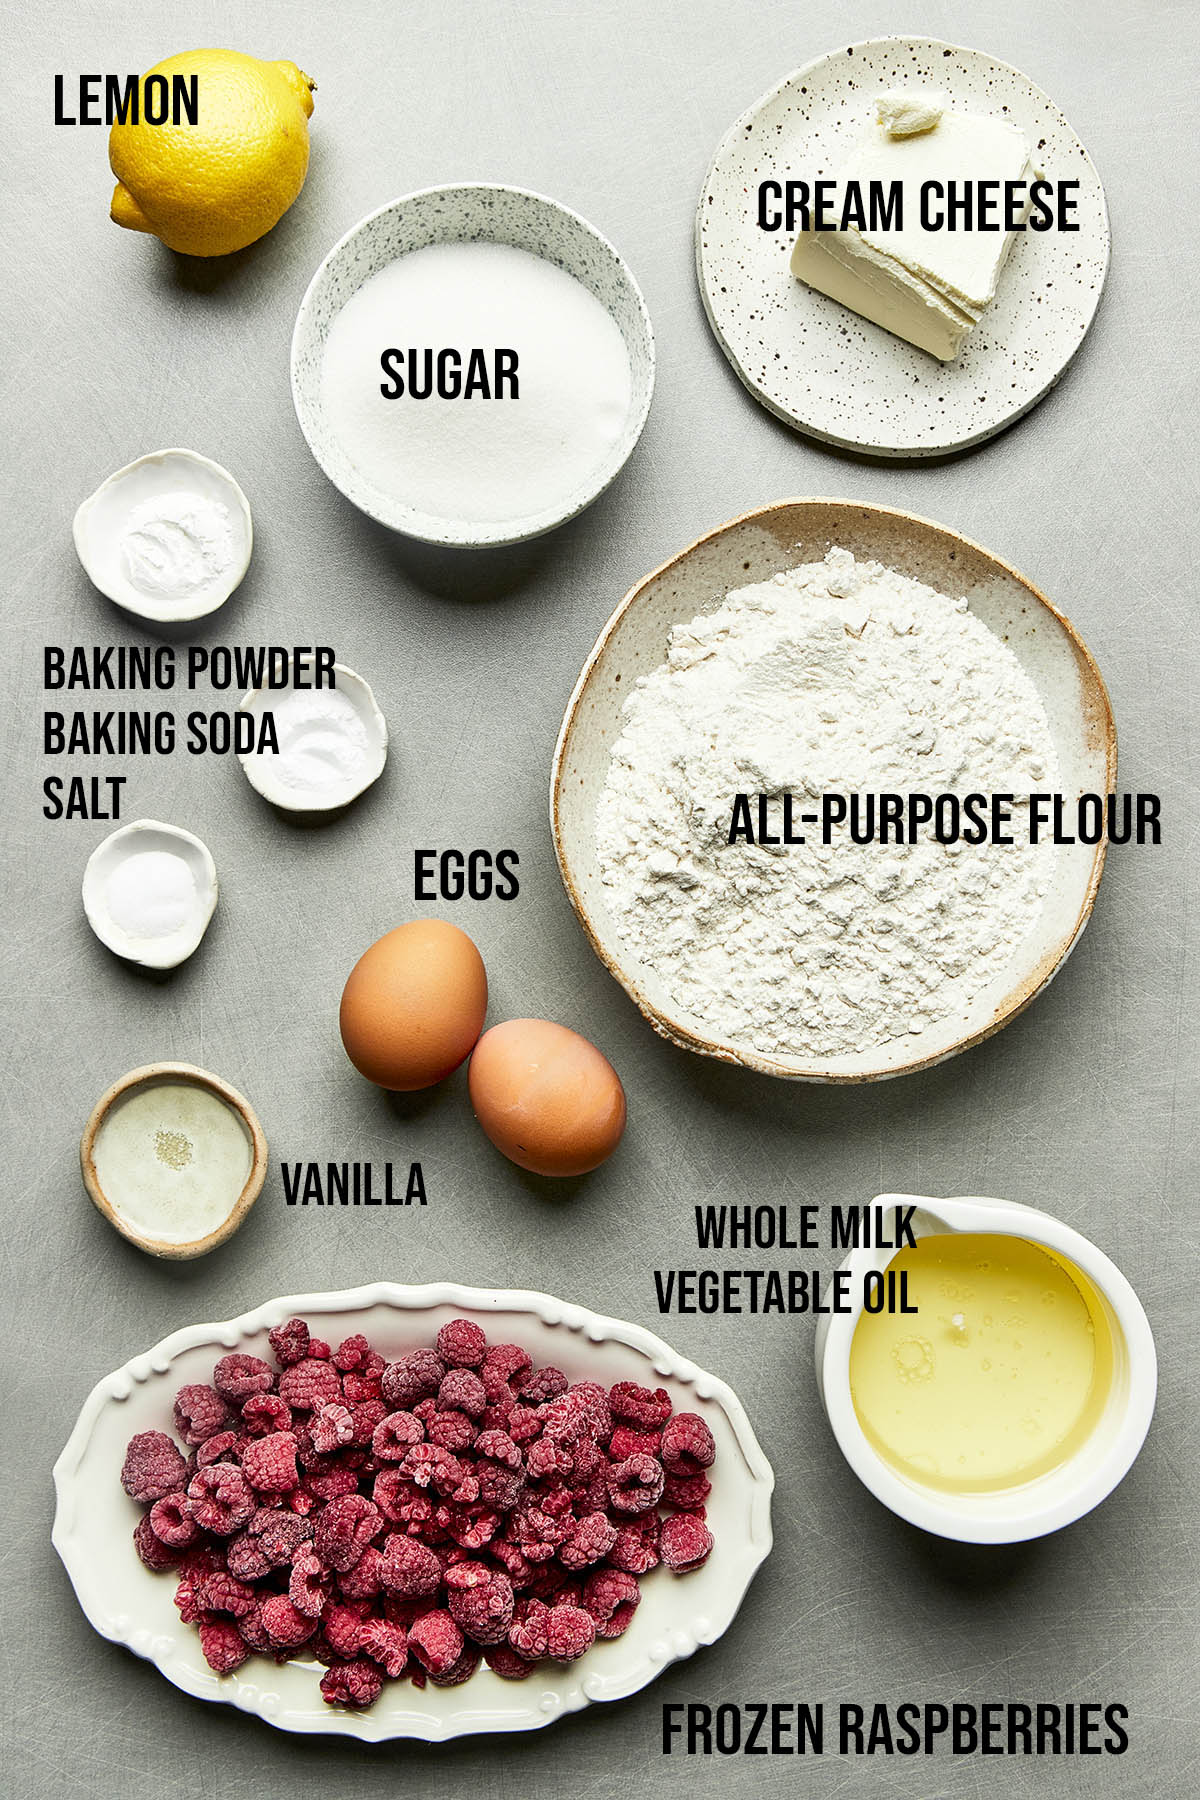 Ingredients to make lemon raspberry muffins.